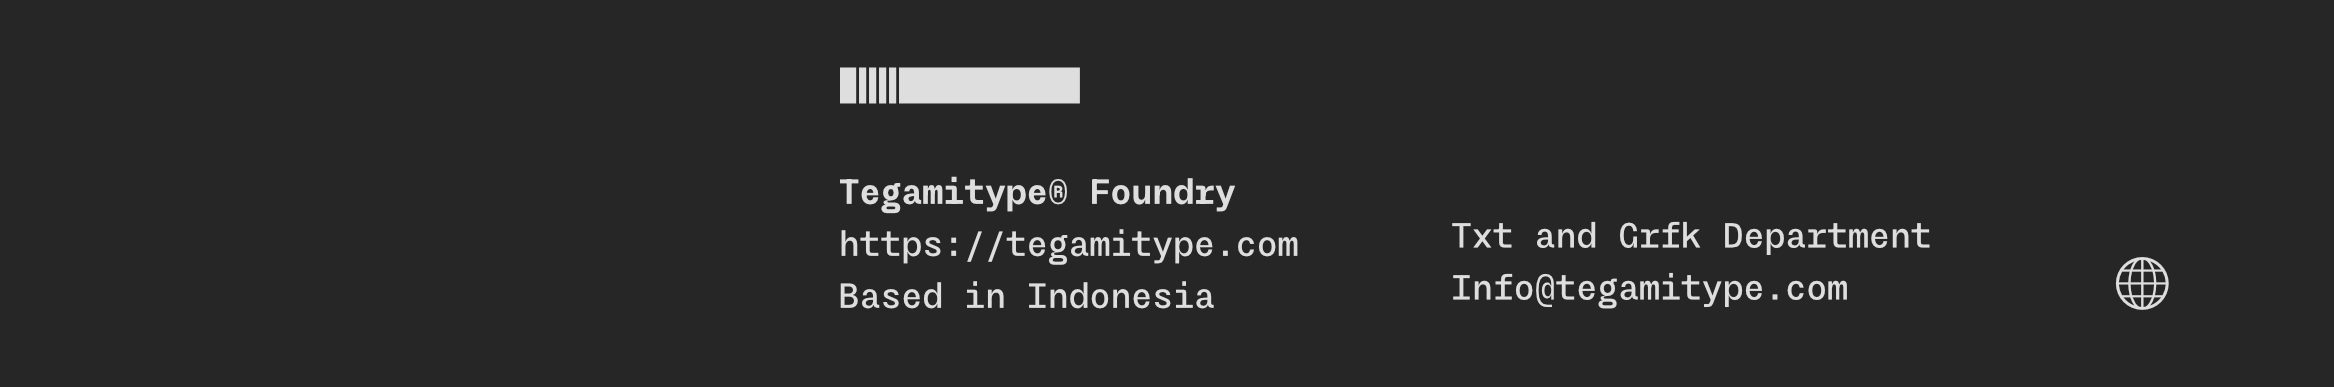 Tegamitype® Foundry's profile banner